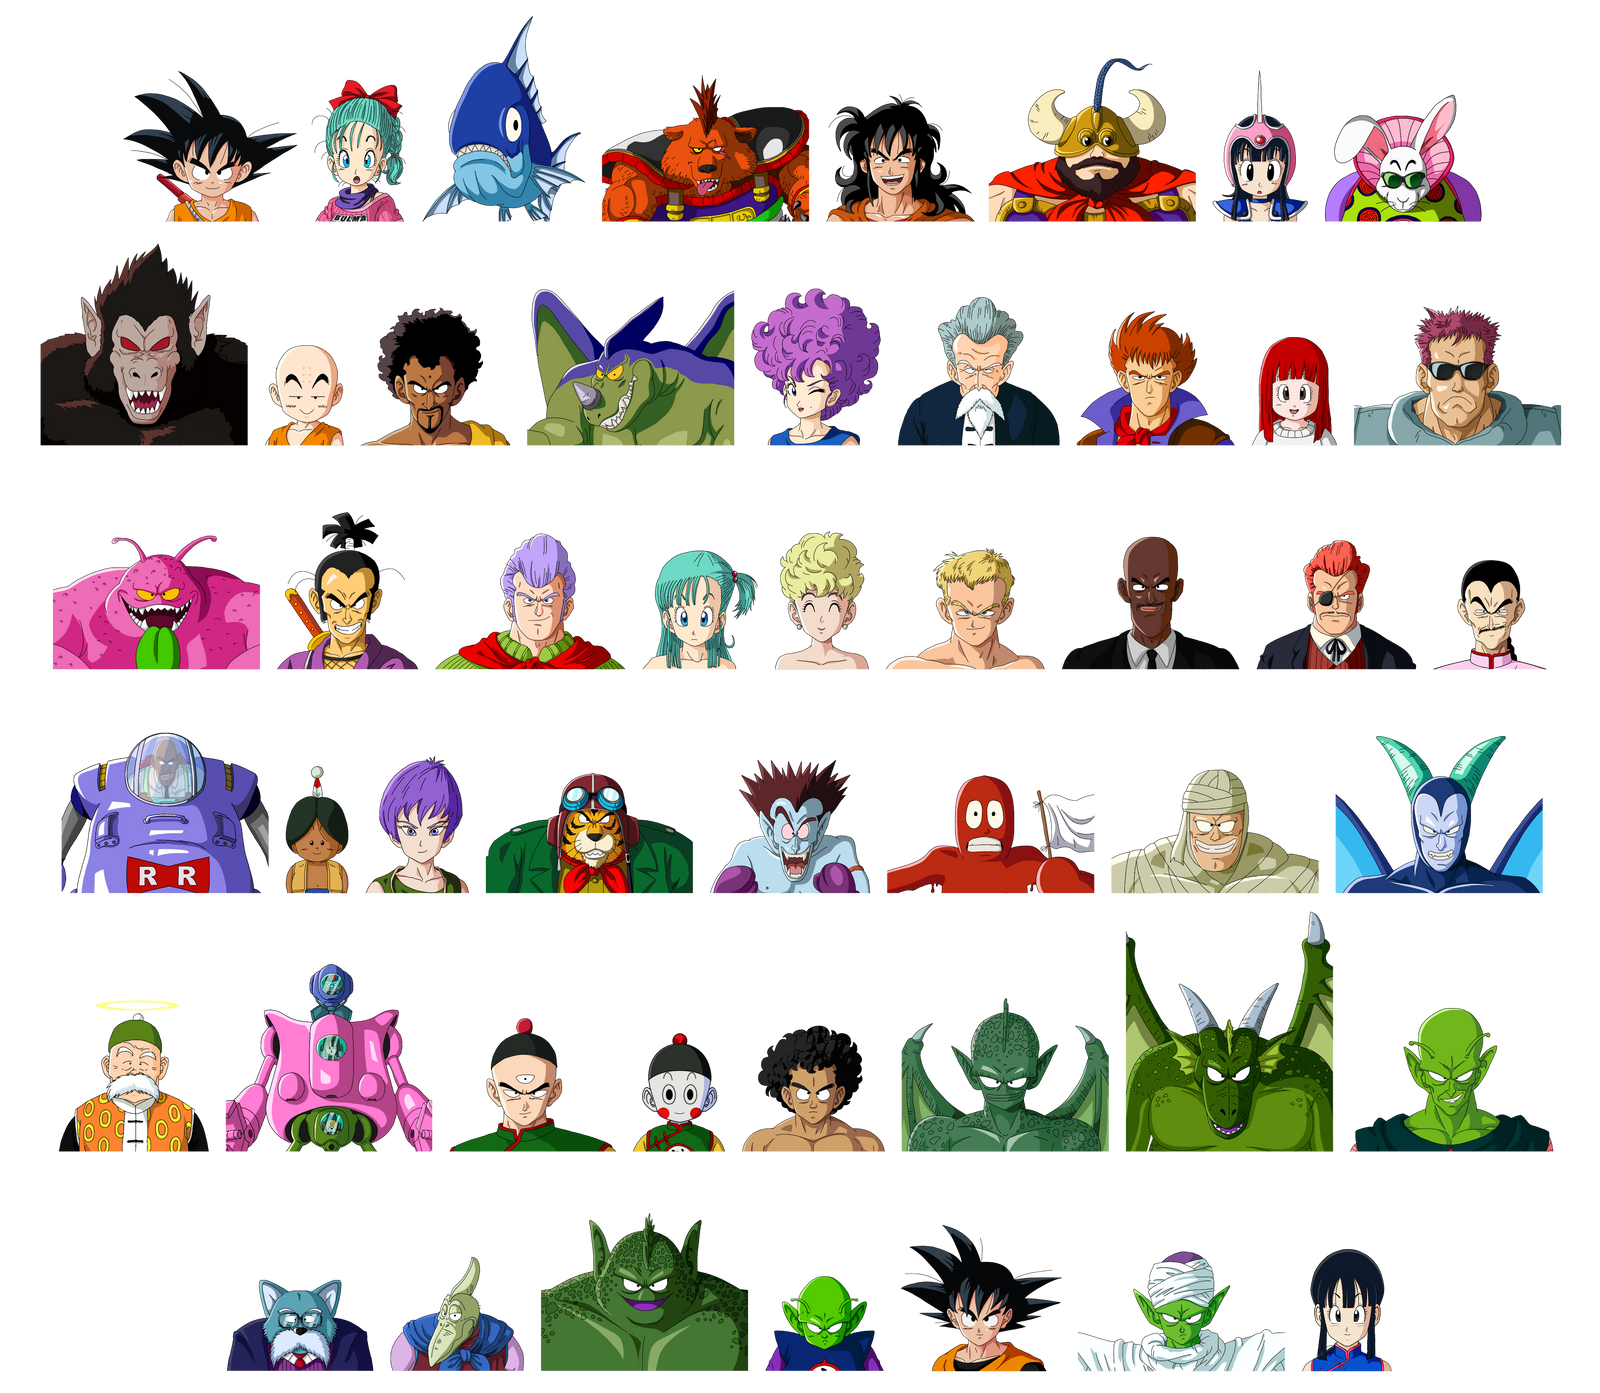 Dragon Ball characters render by ShadowBito on DeviantArt